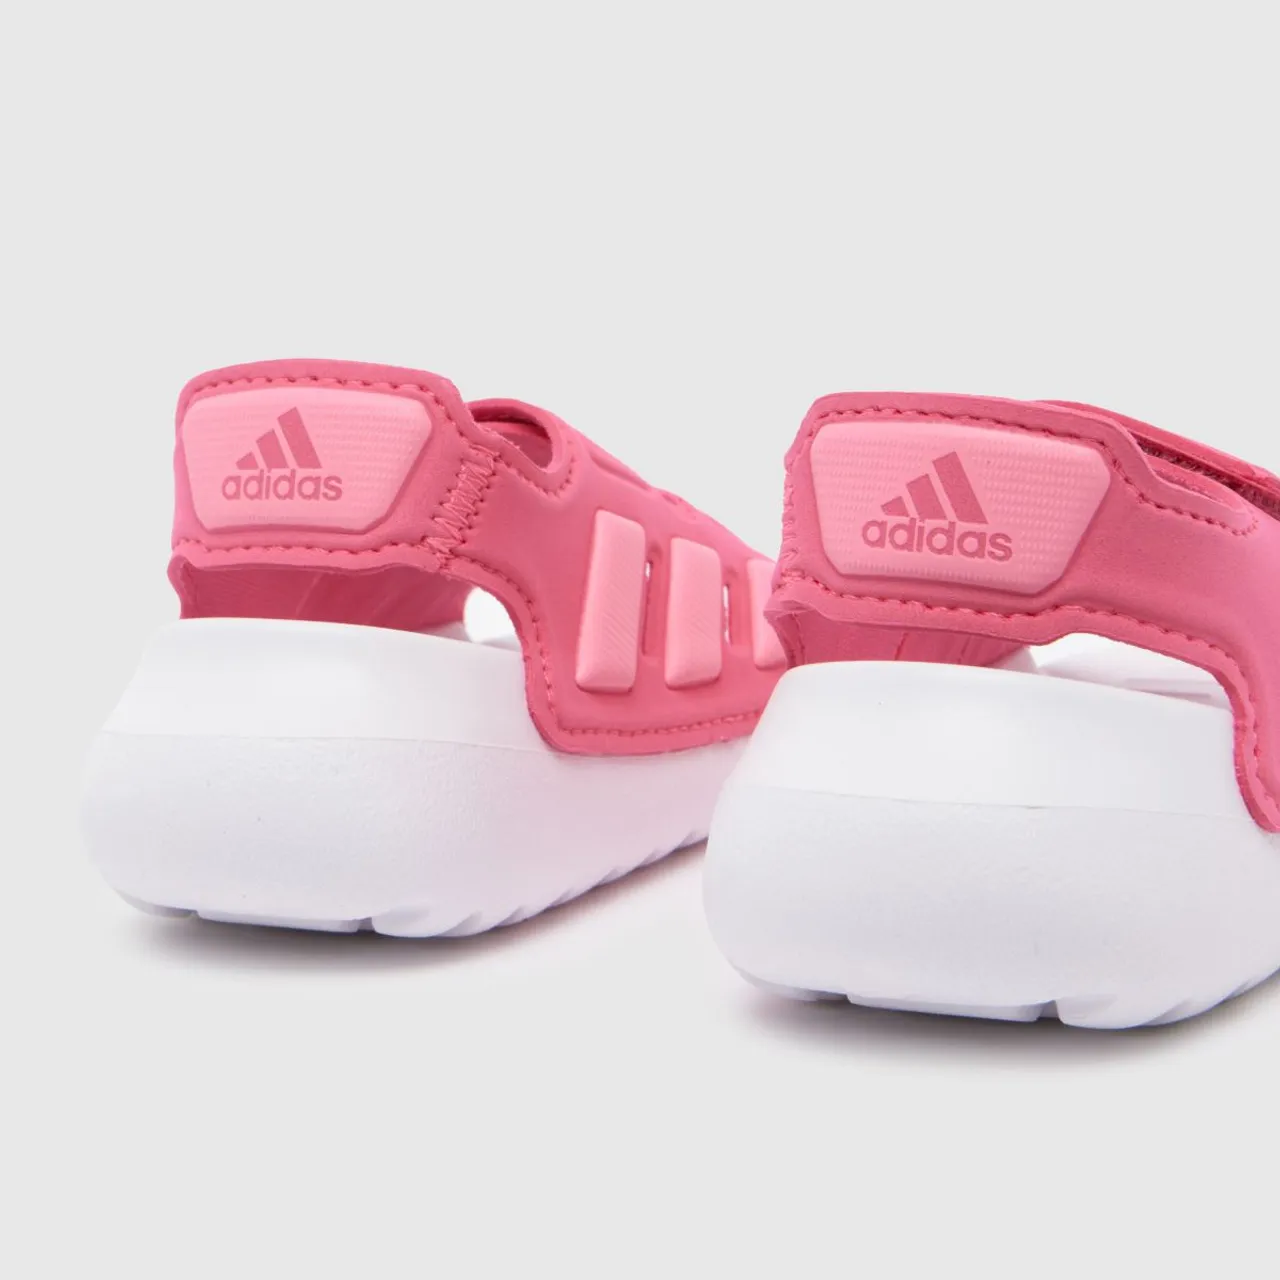 Adidas Pink Altaswim 2.0 Girls Toddler Sandals